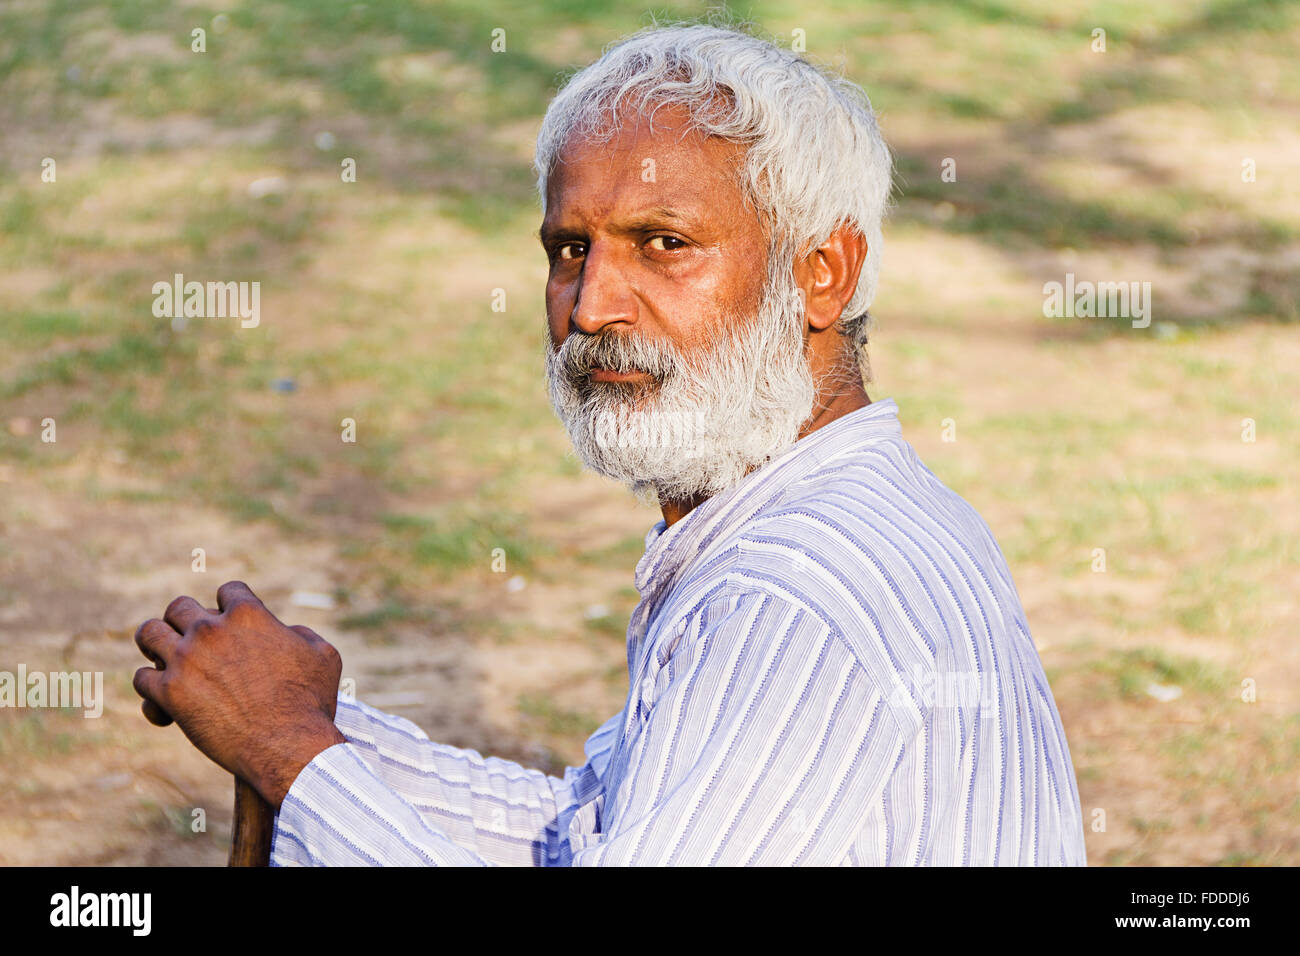 1 persone uomo adulto Senior Park seduta bastone da passeggio Foto Stock